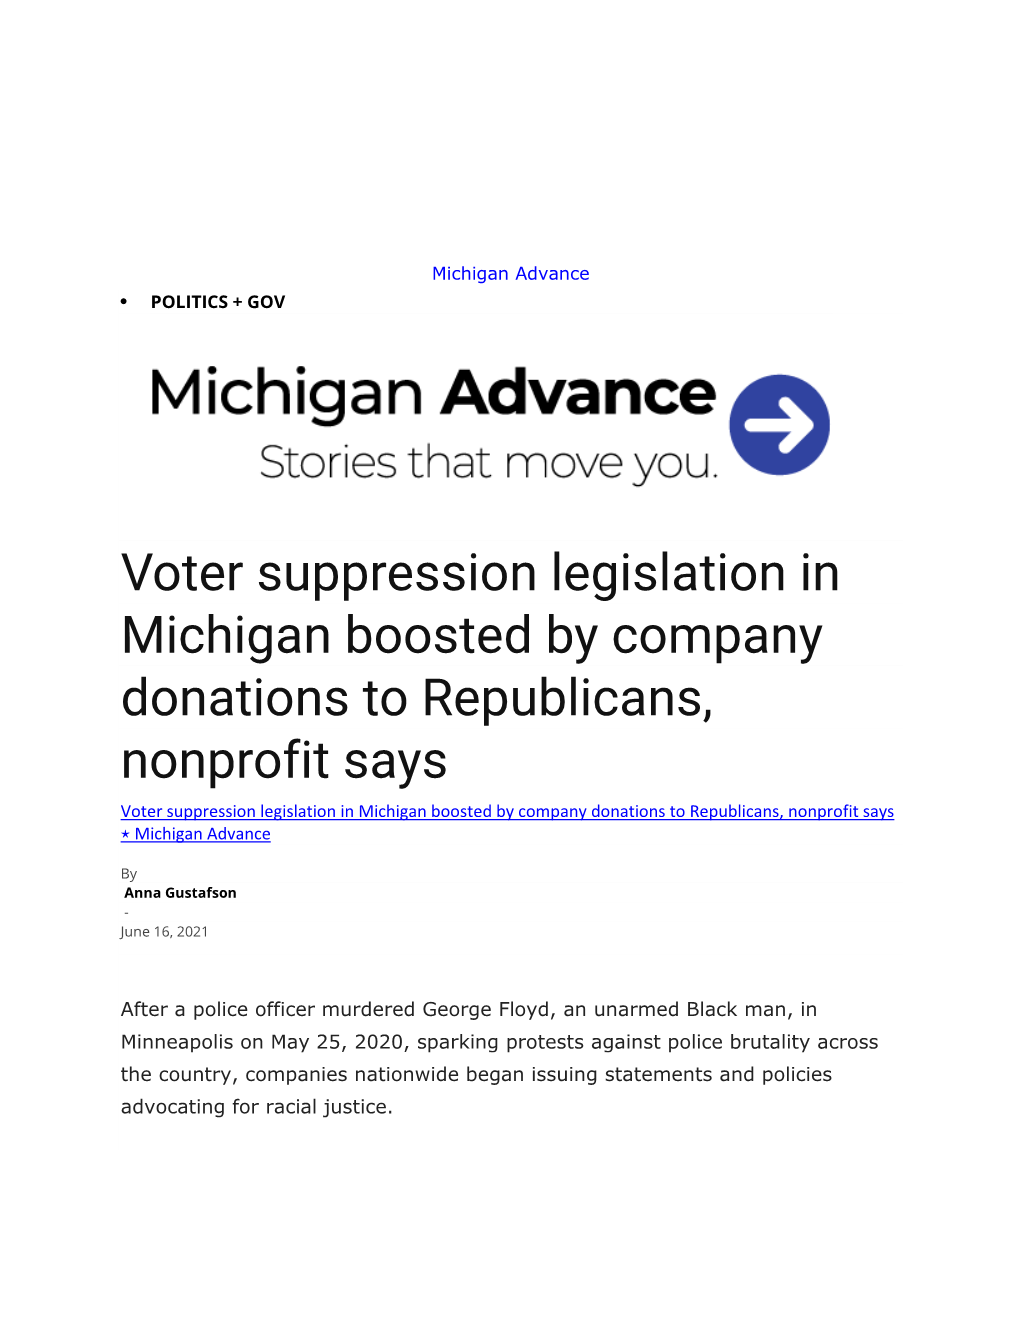 Michigan Advance – Voter Suppression Legislation in Michigan Boosted by Company Donations to Republicans, Nonprofit Says